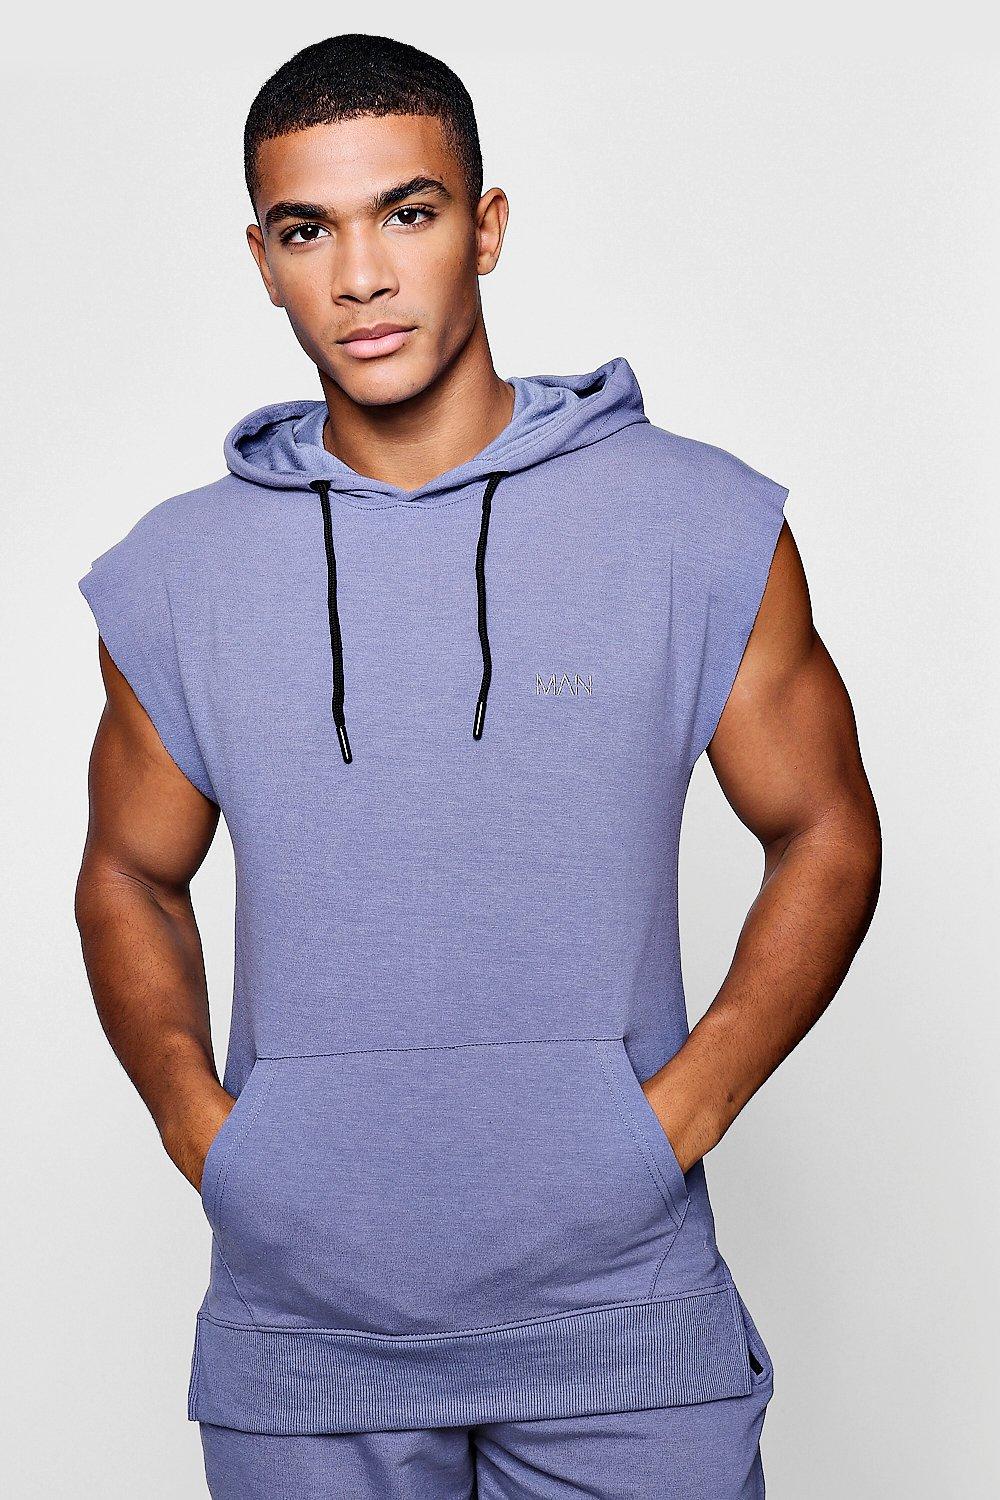 sleeveless gym hoodie